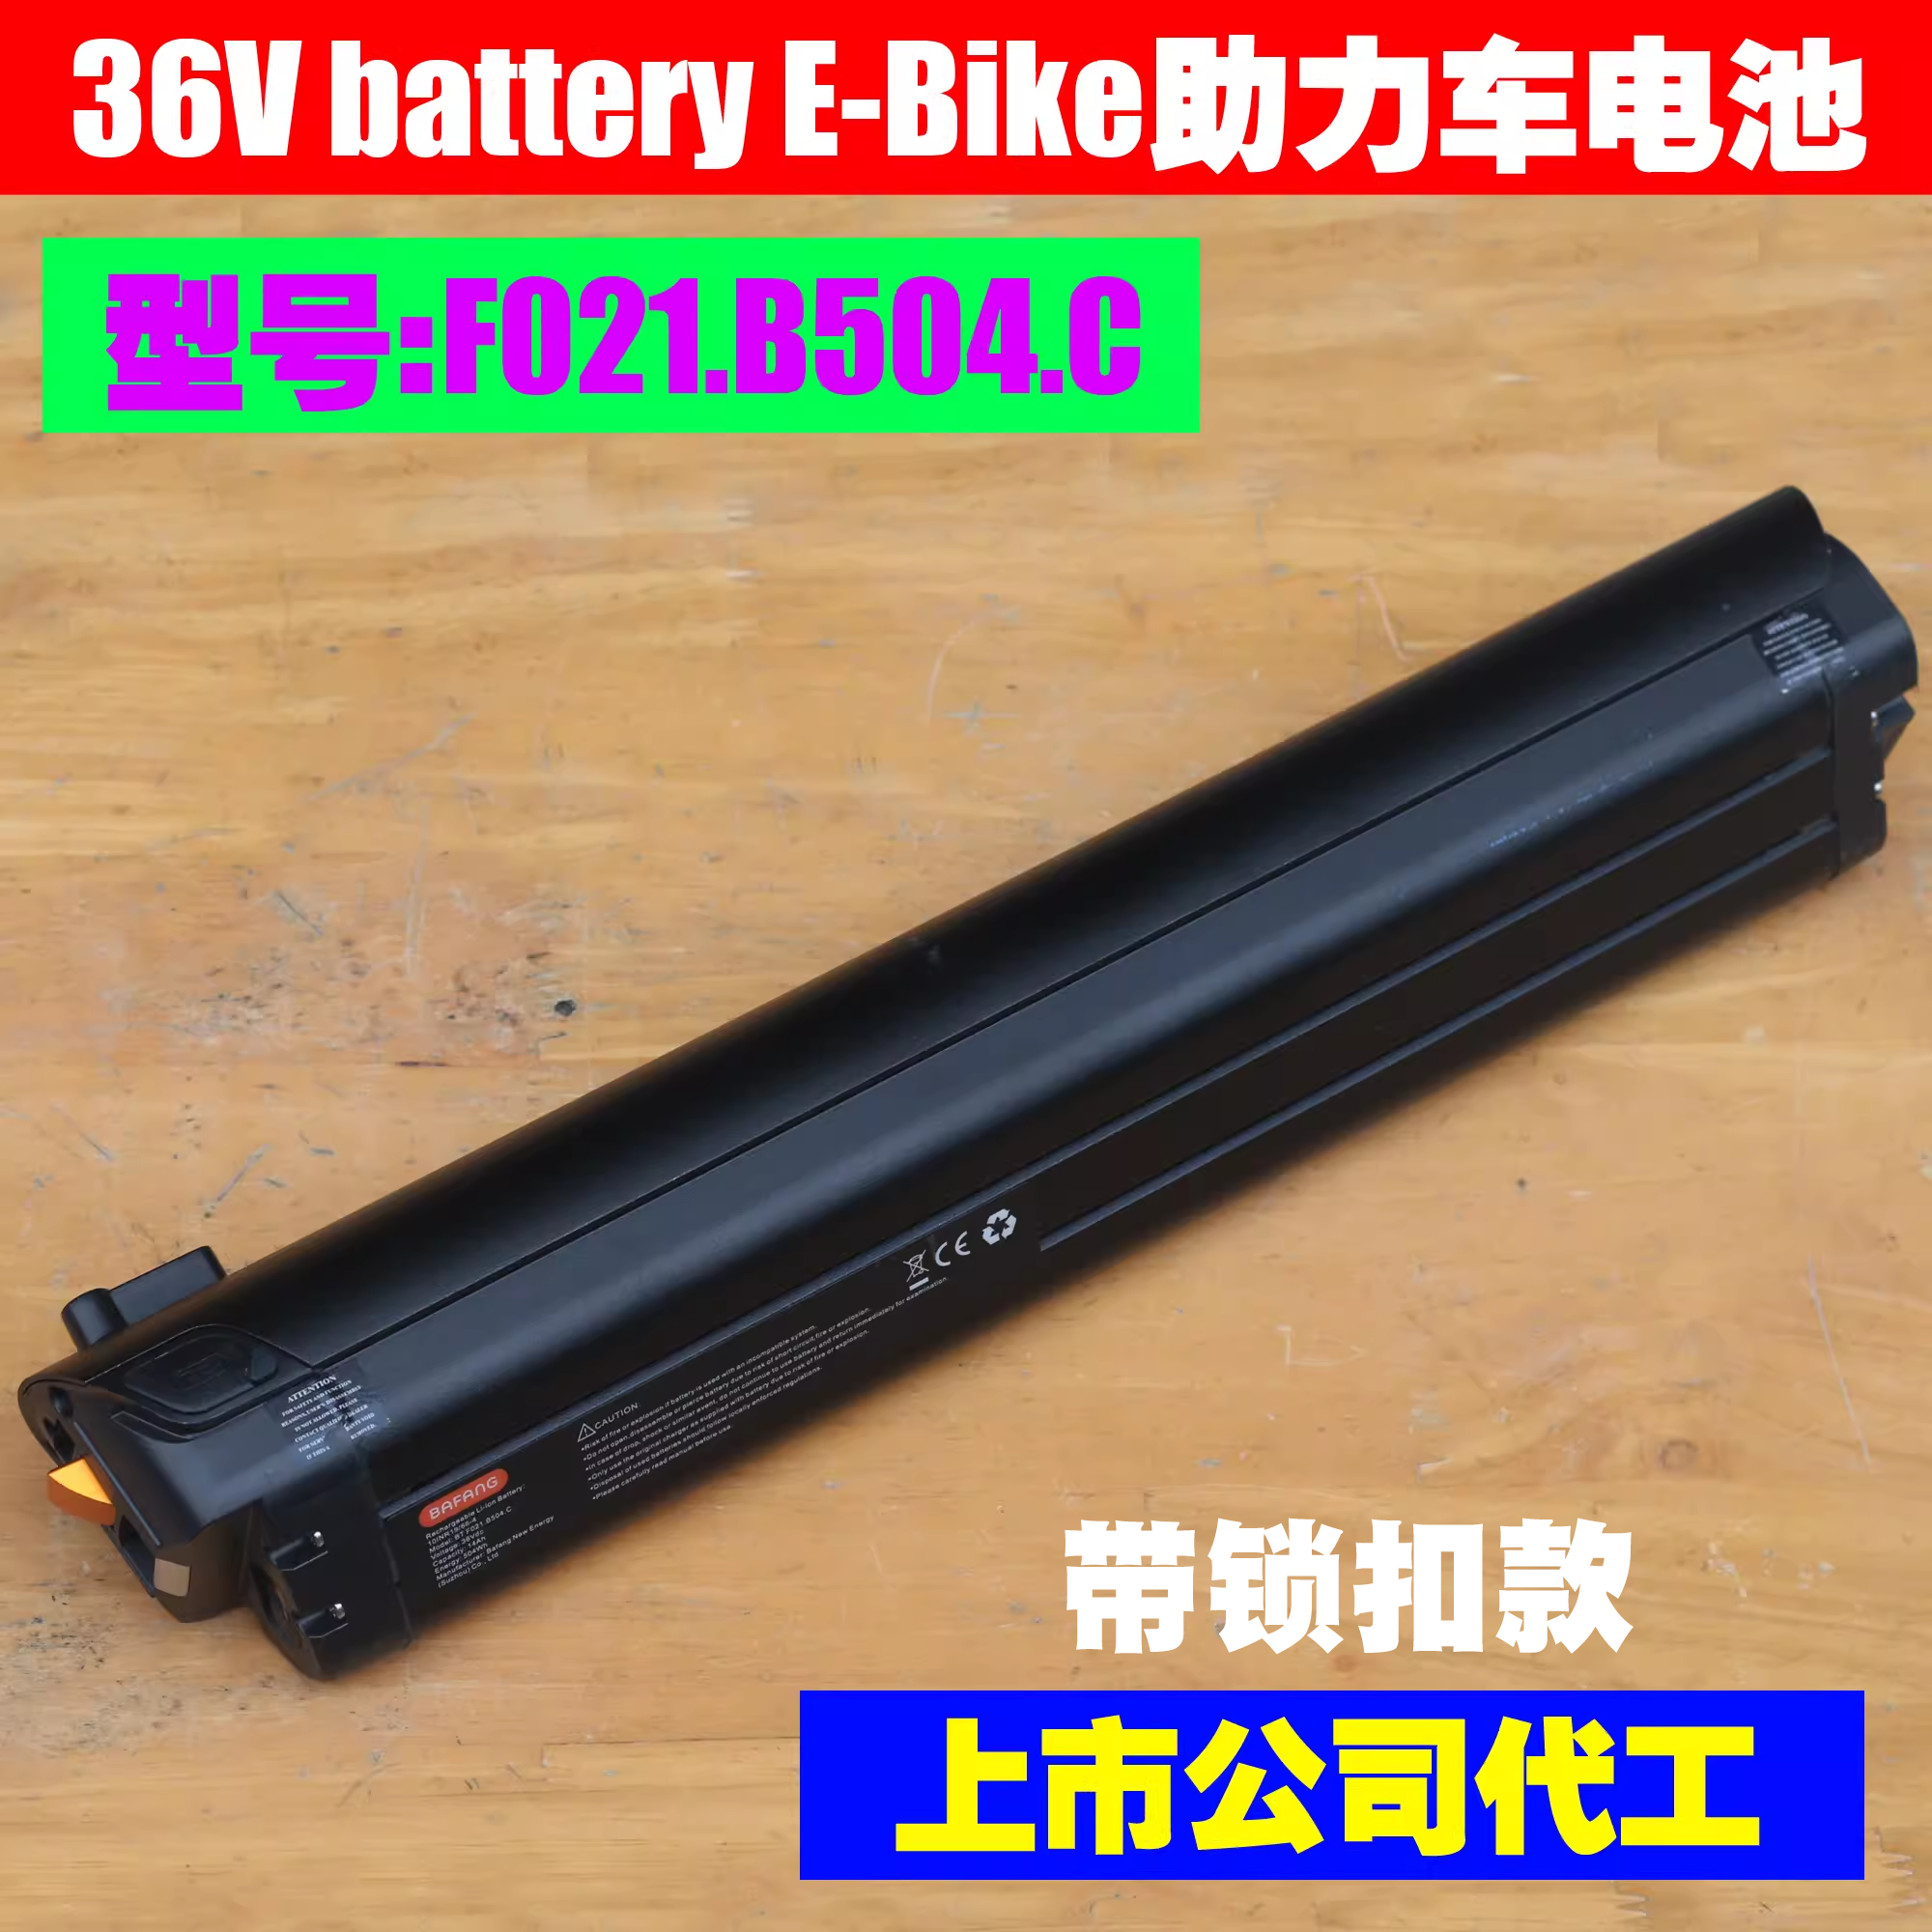 36V Reention ebike battery 电单车电池 BAFANG BF F021.B504.C 电动车/配件/交通工具 电动车电池 原图主图